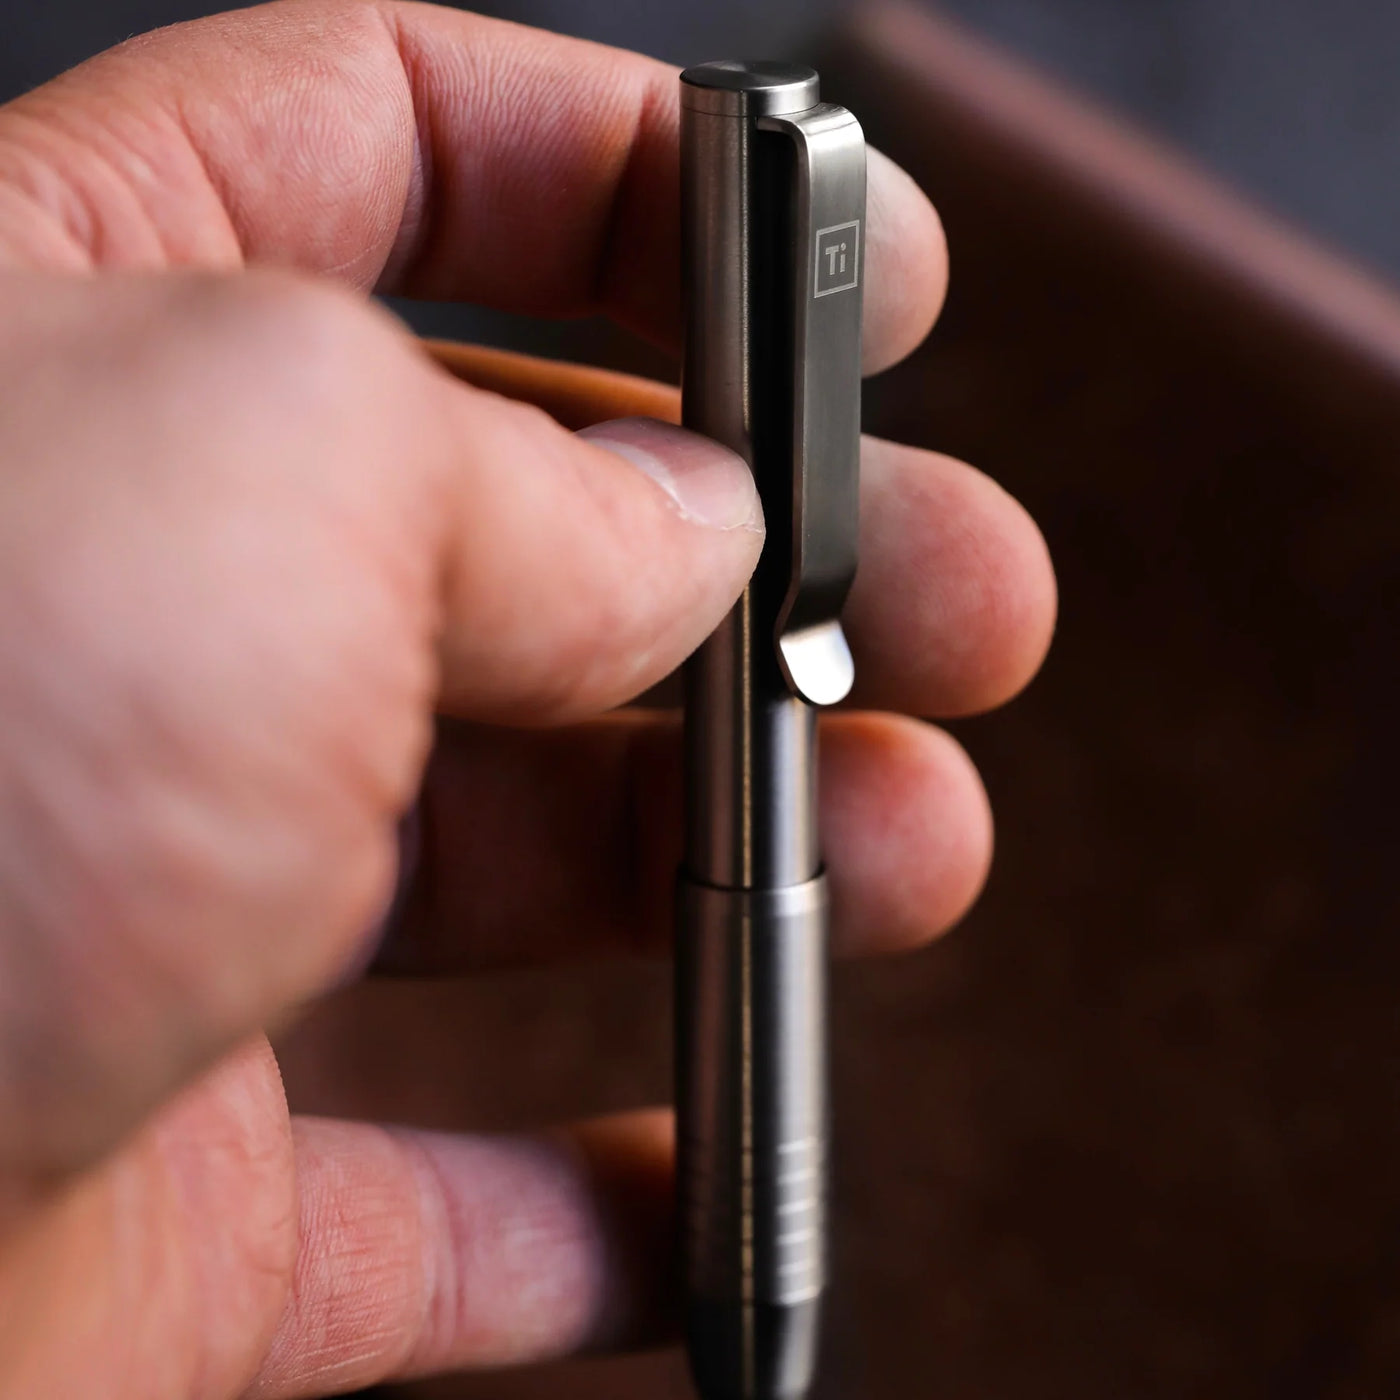 Big Idea Design - Ti Pocket Pro : The Auto Adjusting EDC Pen